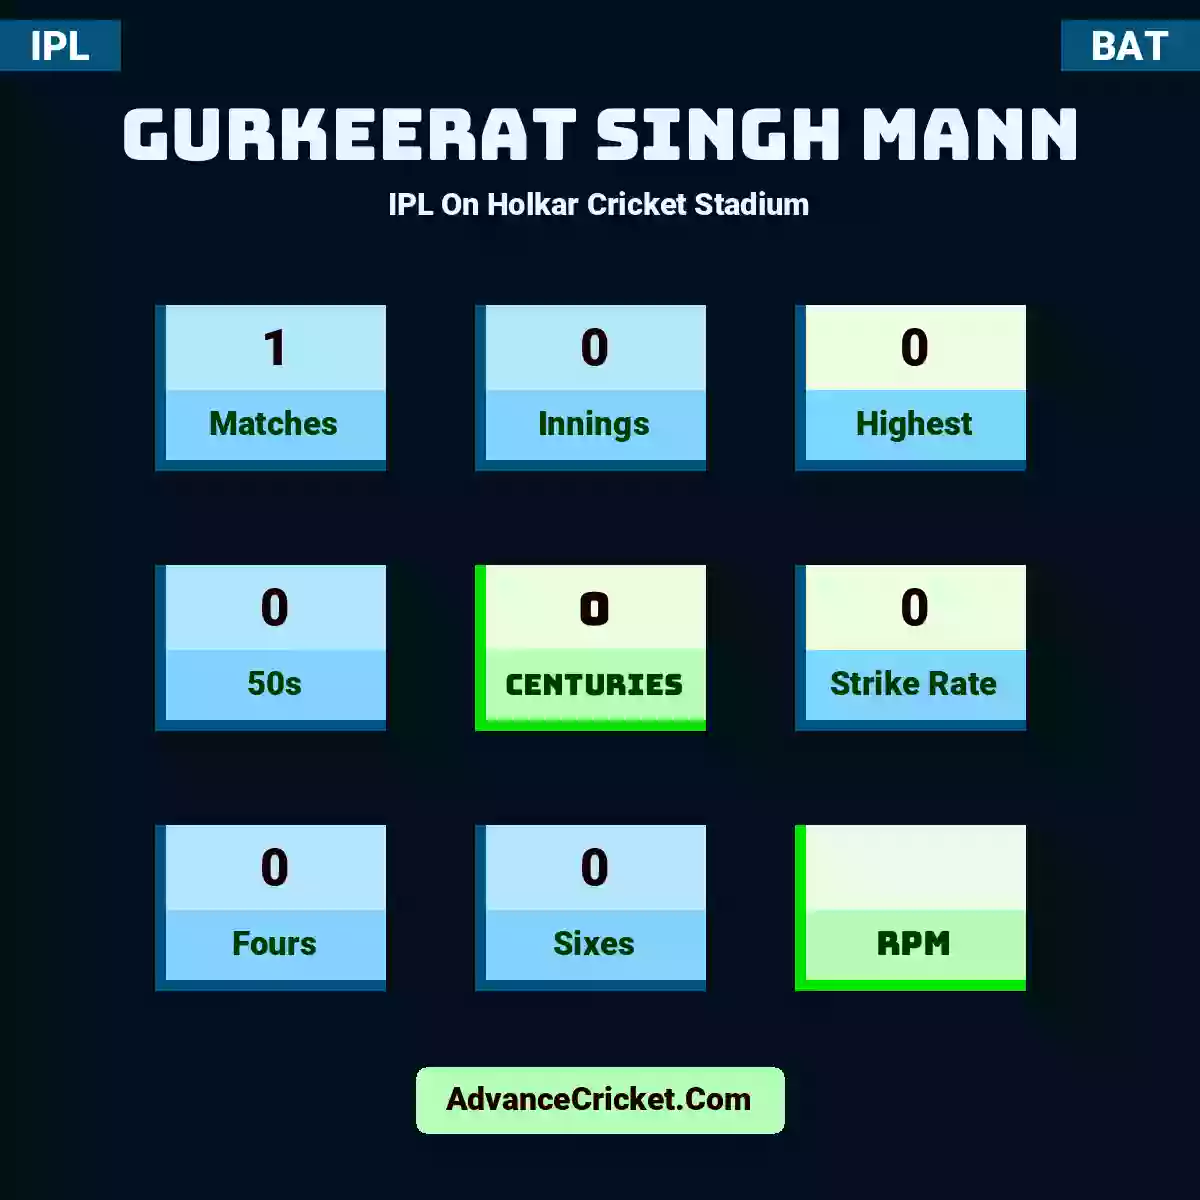 Gurkeerat Singh Mann IPL  On Holkar Cricket Stadium, Gurkeerat Singh Mann played 1 matches, scored 0 runs as highest, 0 half-centuries, and 0 centuries, with a strike rate of 0. G.Mann hit 0 fours and 0 sixes.